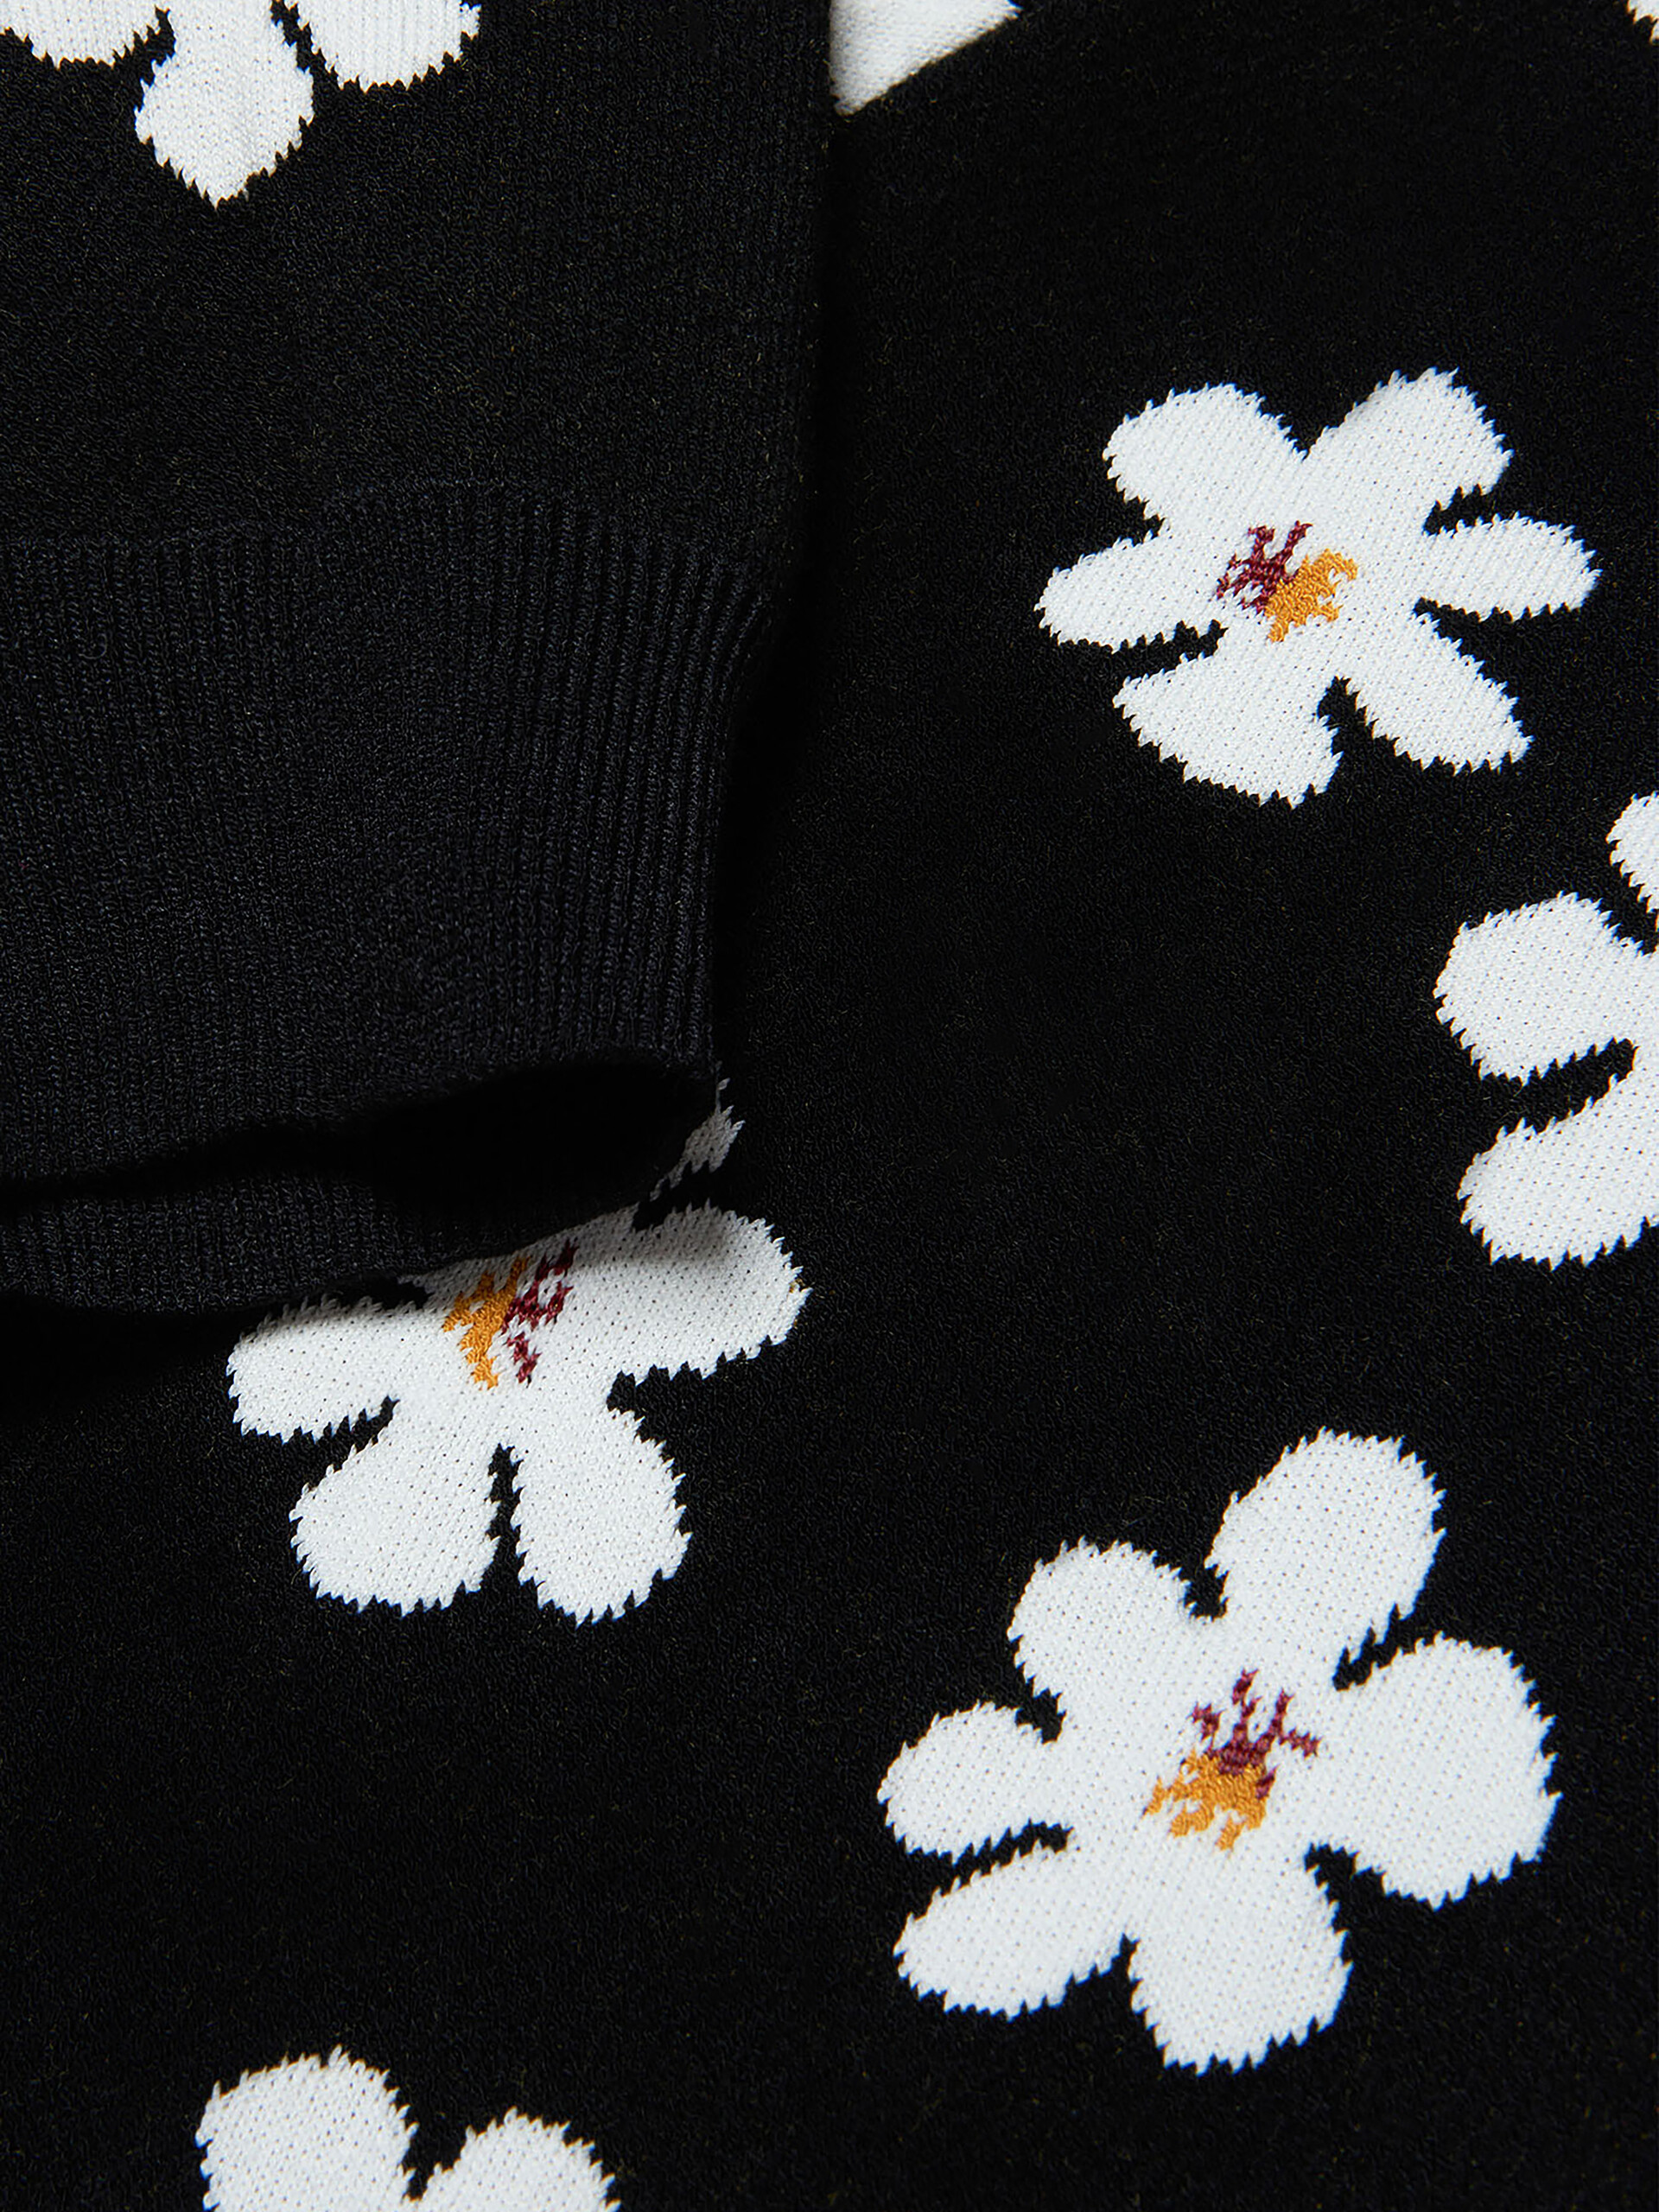 Black cardigan with jacquard Daisy motif - Knitwear - Image 4